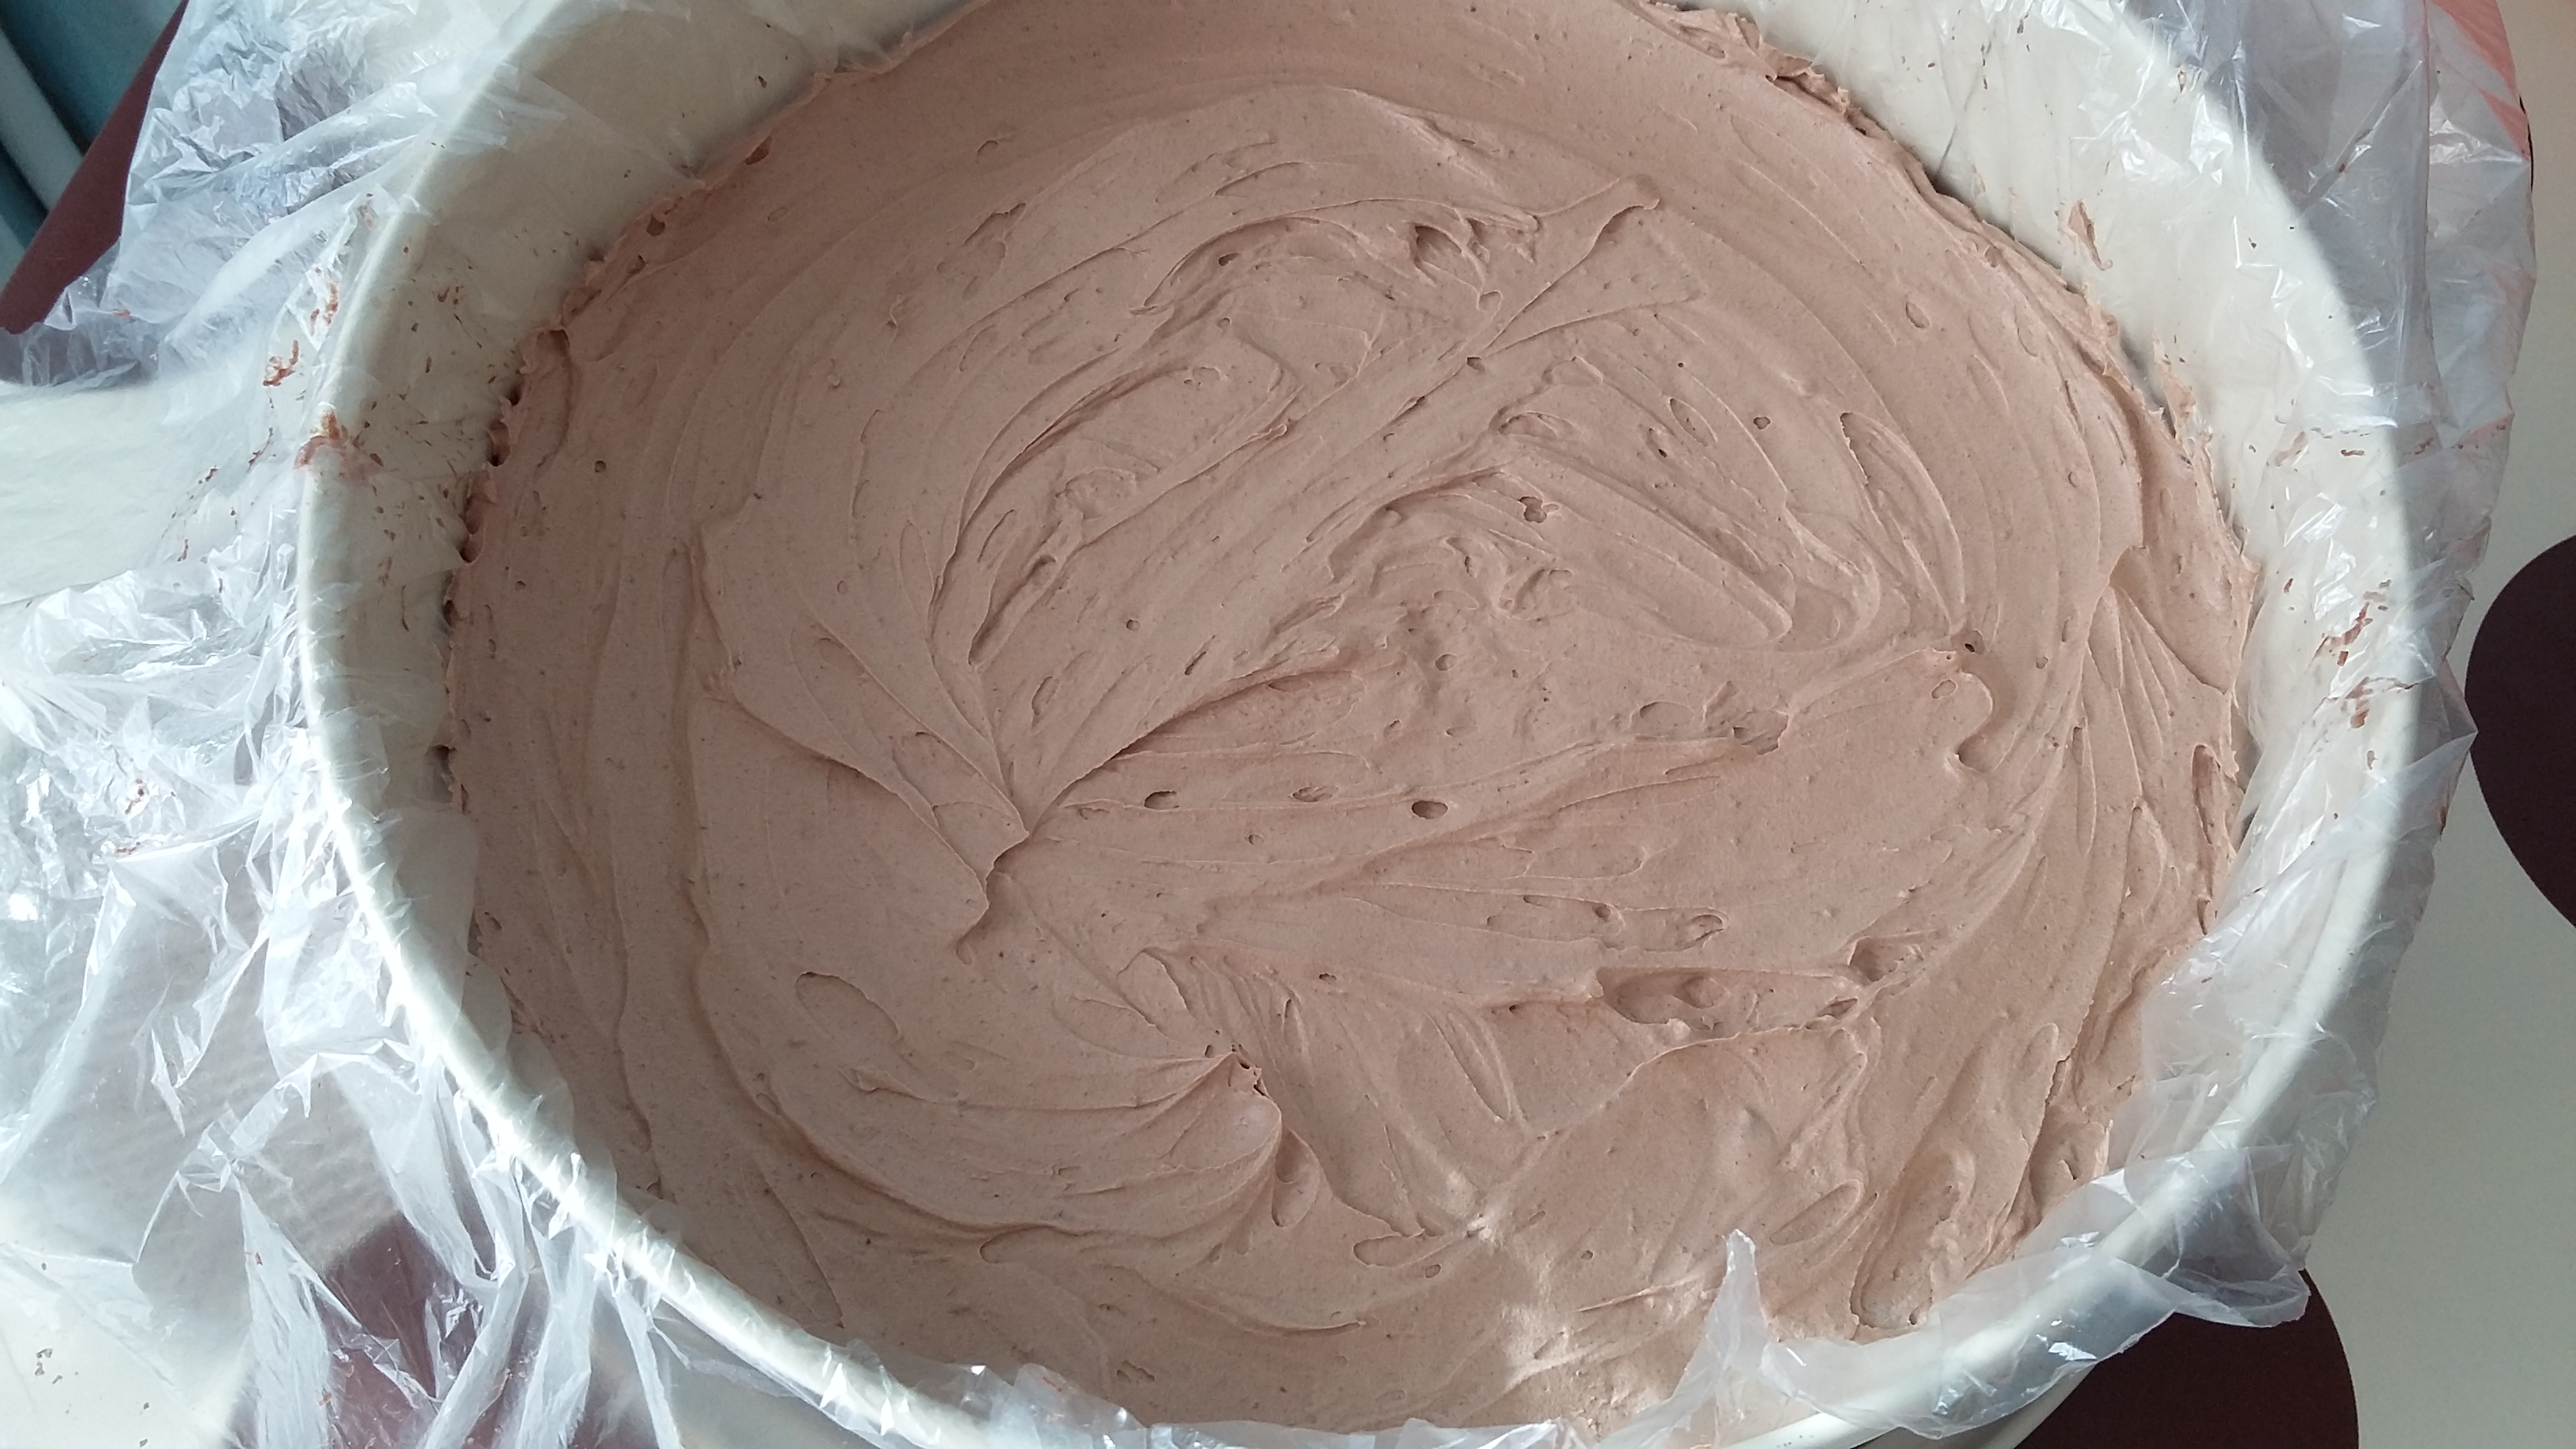 Tort de ciocolata cu capsuni (la rece)